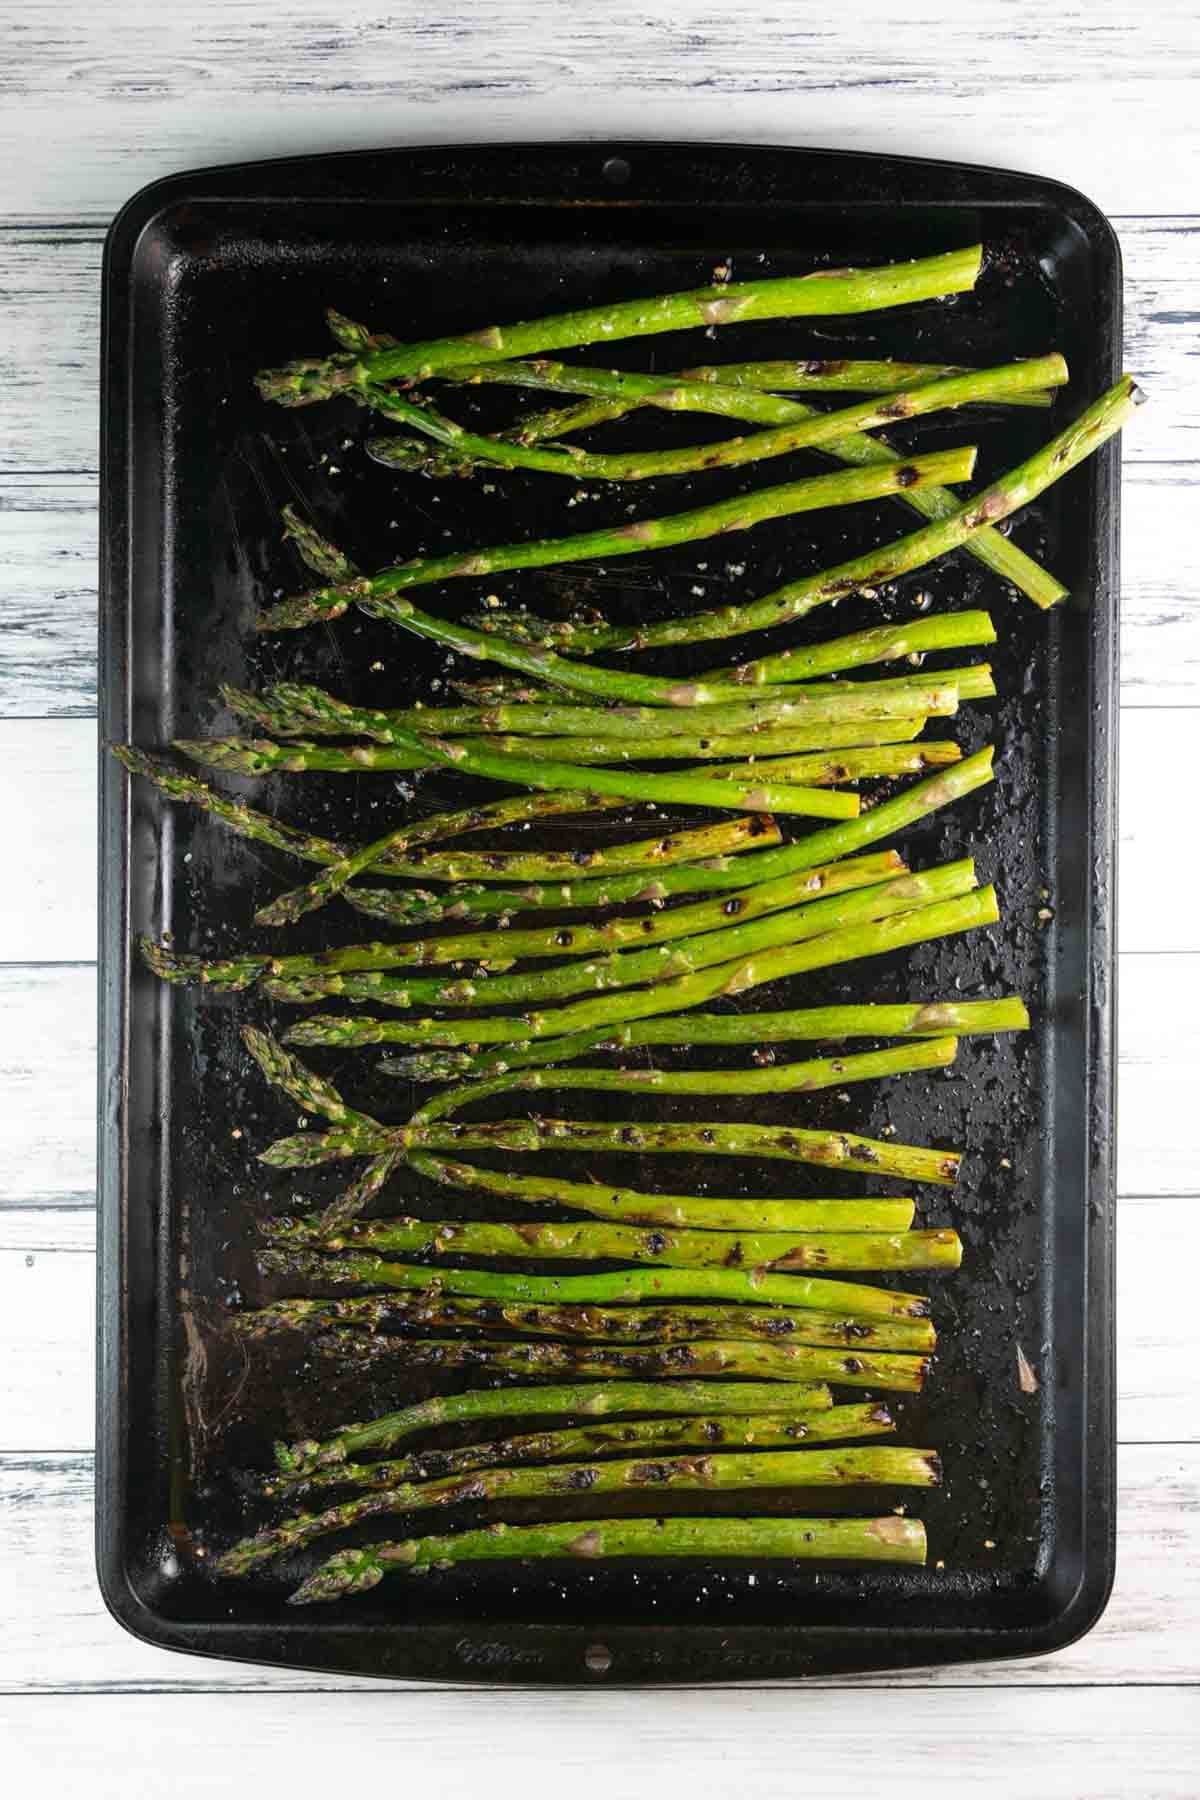 slightly charred asparagus after grilling